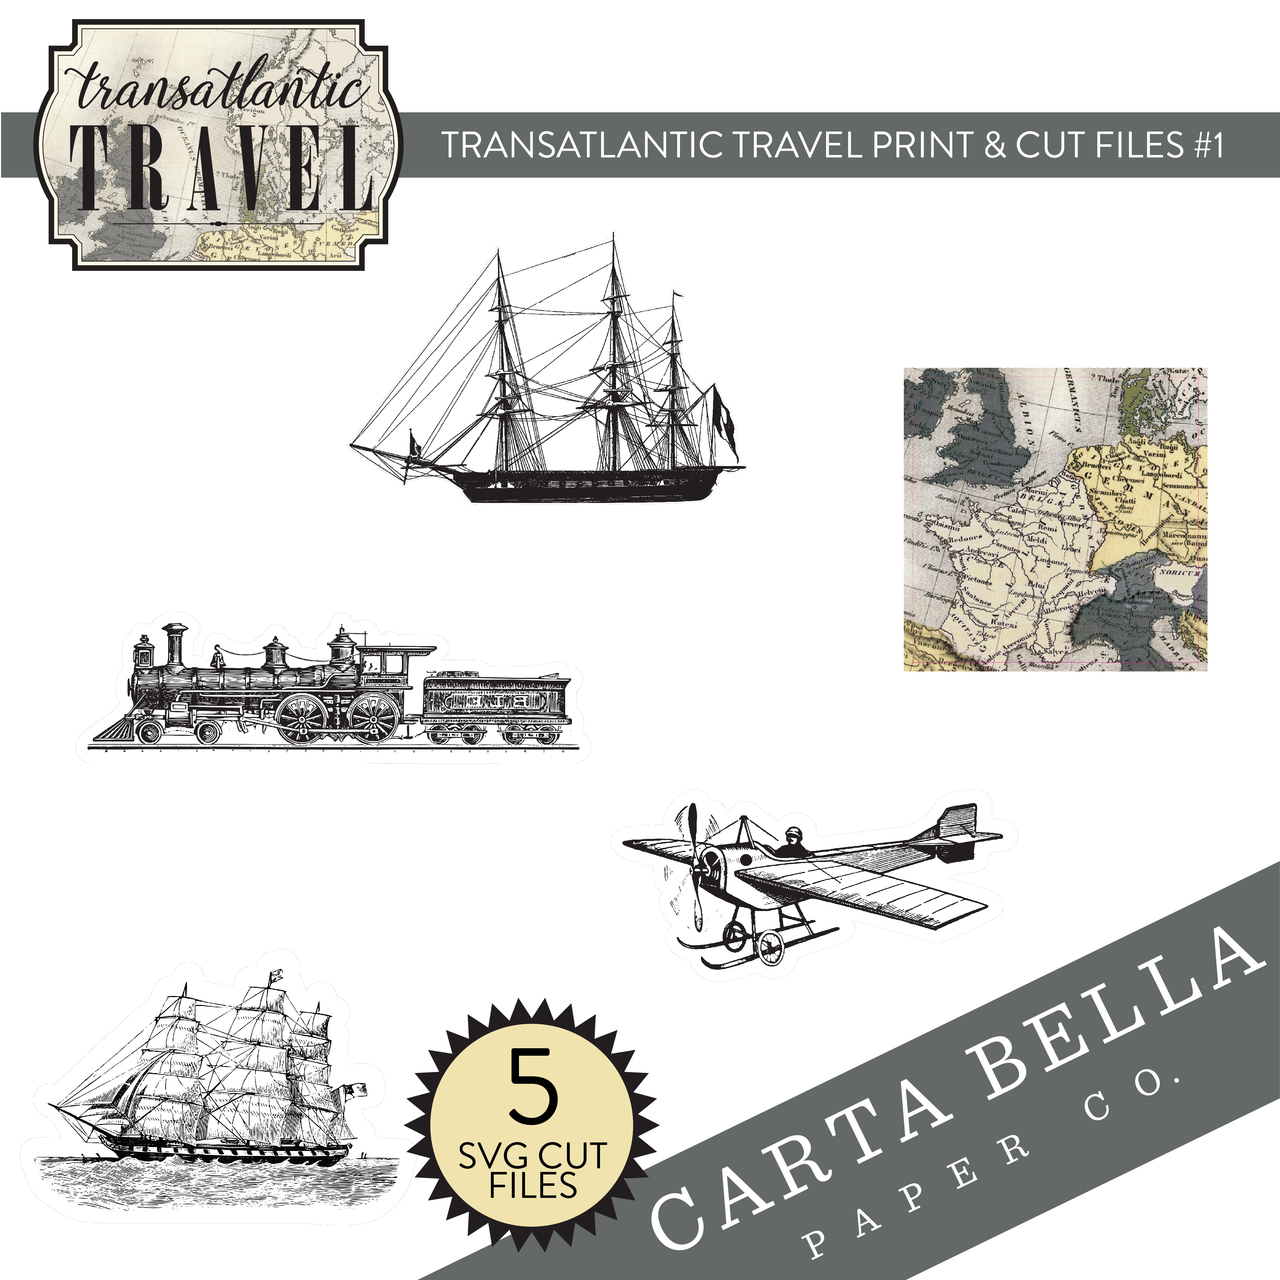 Transatlantic Travel Print & Cut Files #1